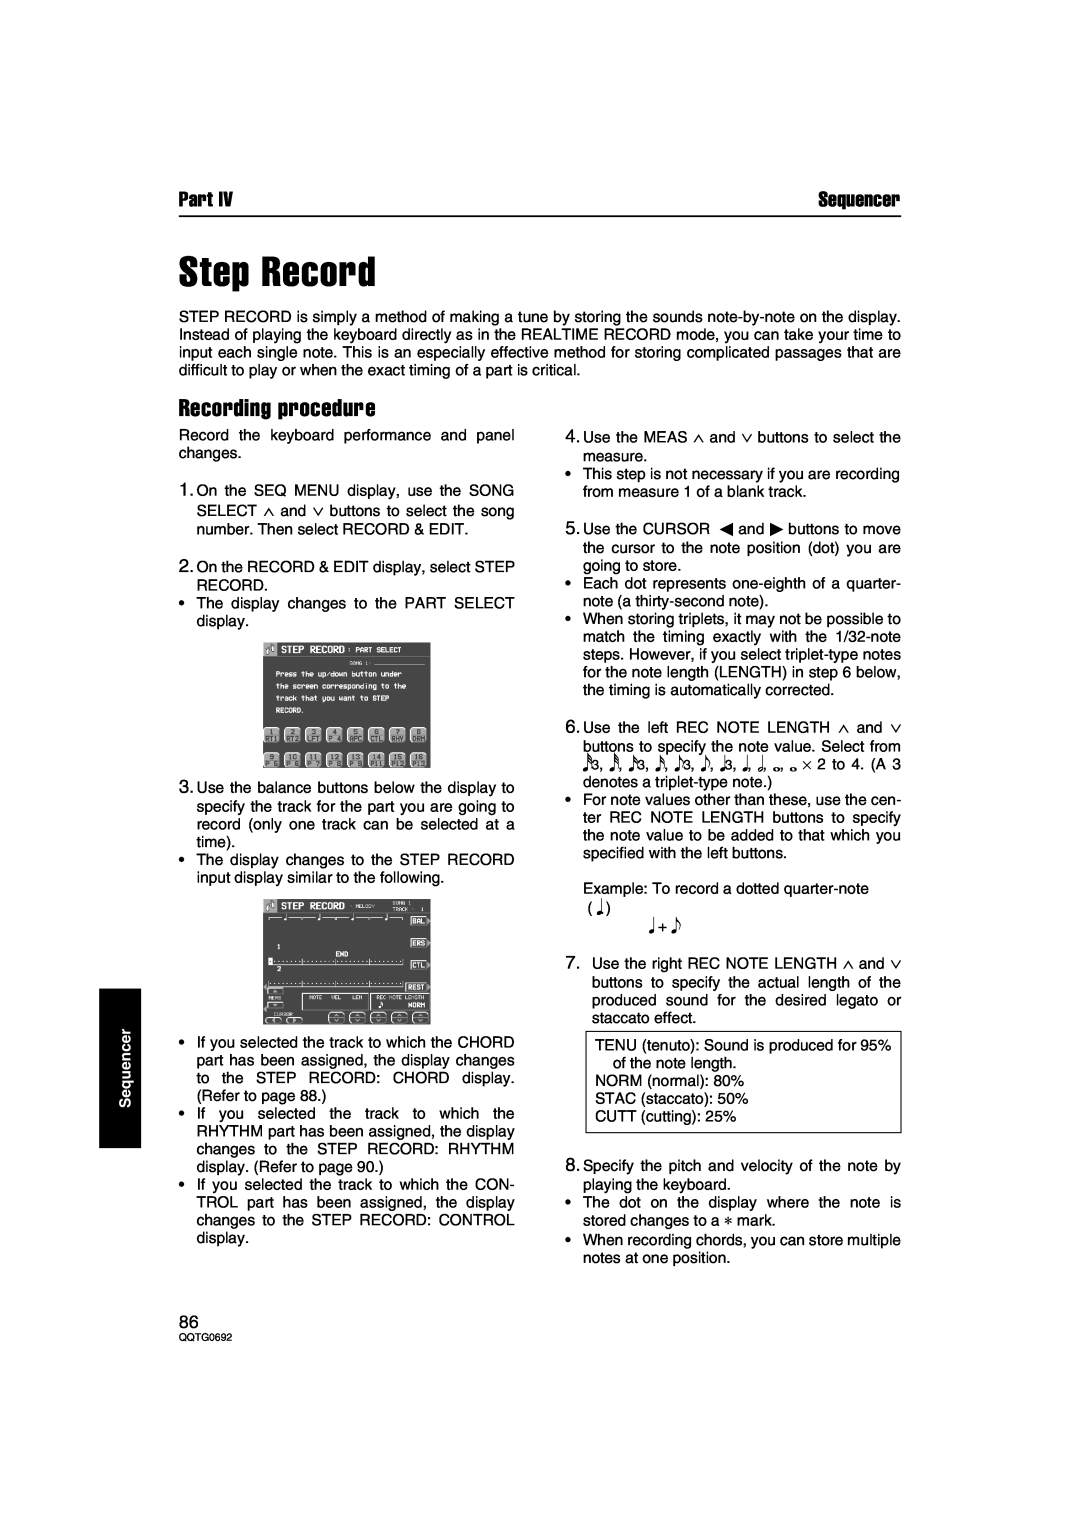 Panasonic SX-KN2600, SX-KN2400 manual Step Record, Recording procedure, Part, Sequencer 